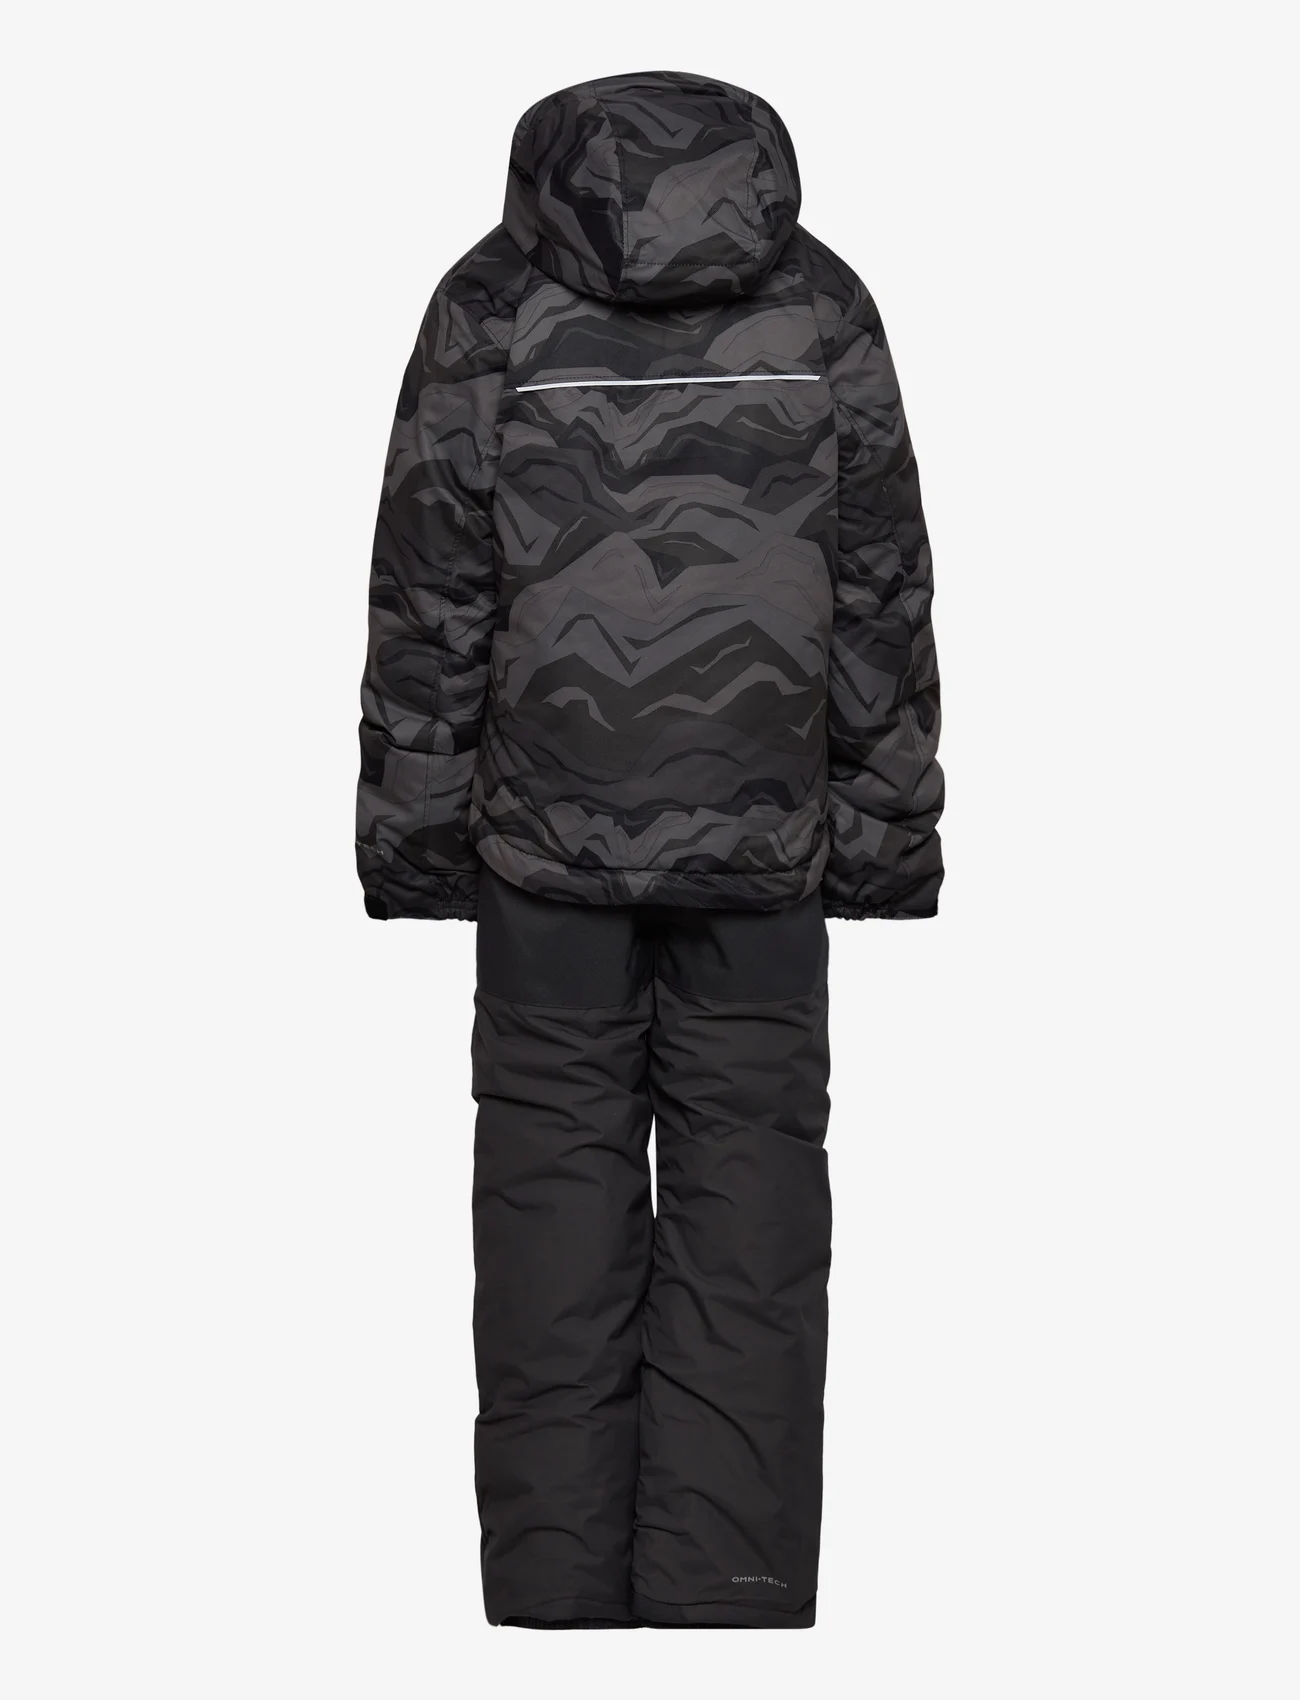 Columbia Sportswear - Buga Set - Žieminiai kombinezonai - black tectonic - 1